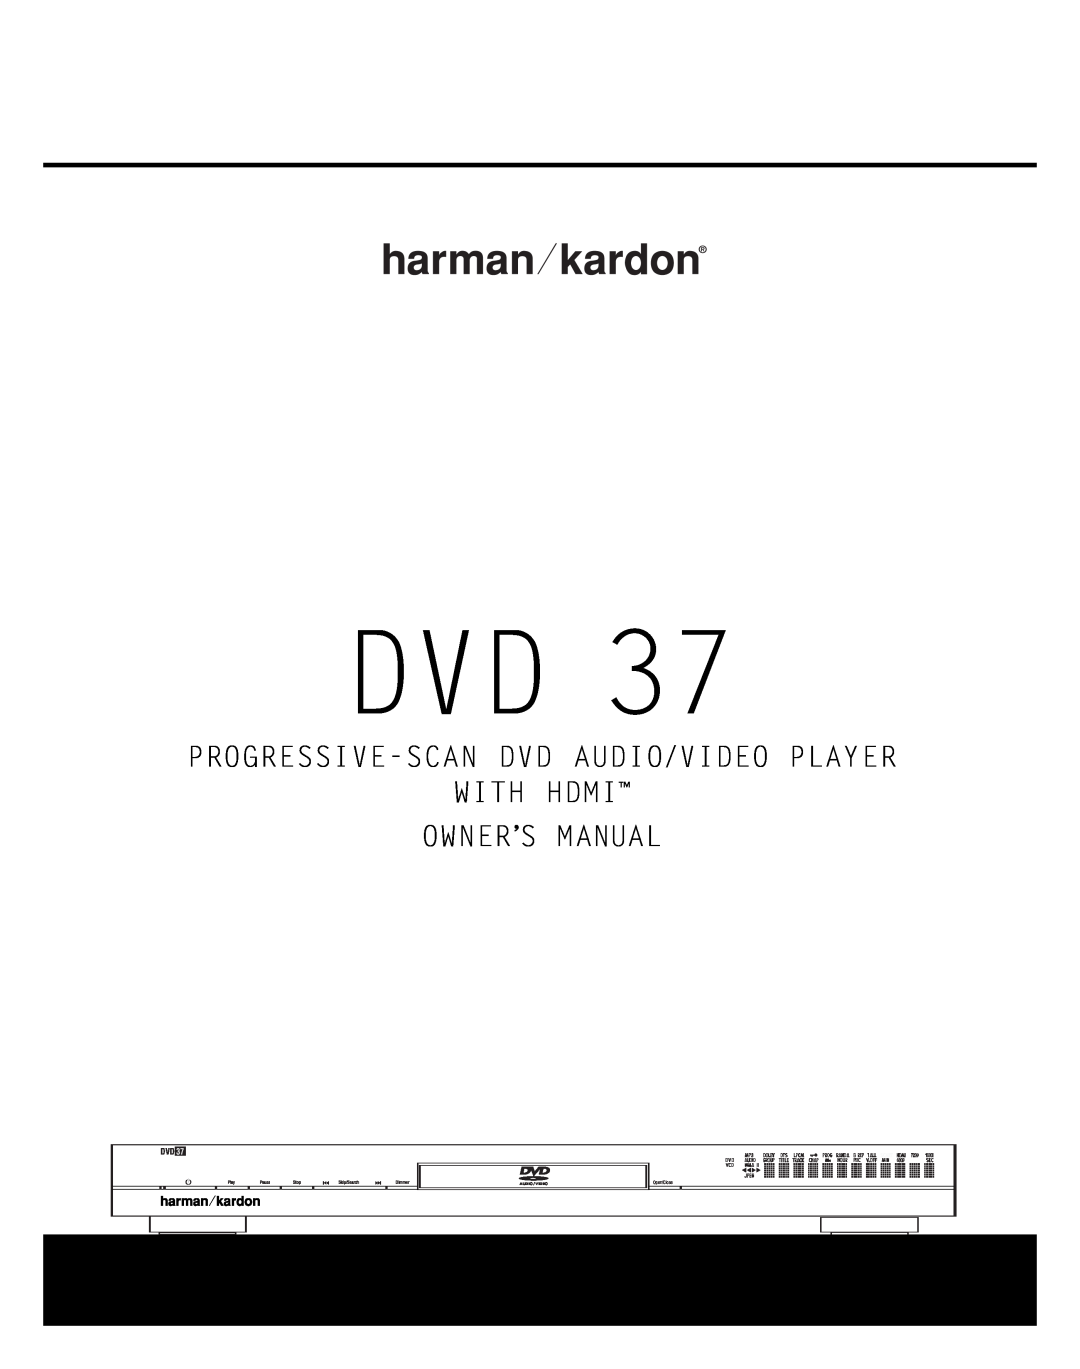 Harman-Kardon DVD 37 owner manual Progressive-Scandvd Audio/Video Player With Hdmi, Open/Close 